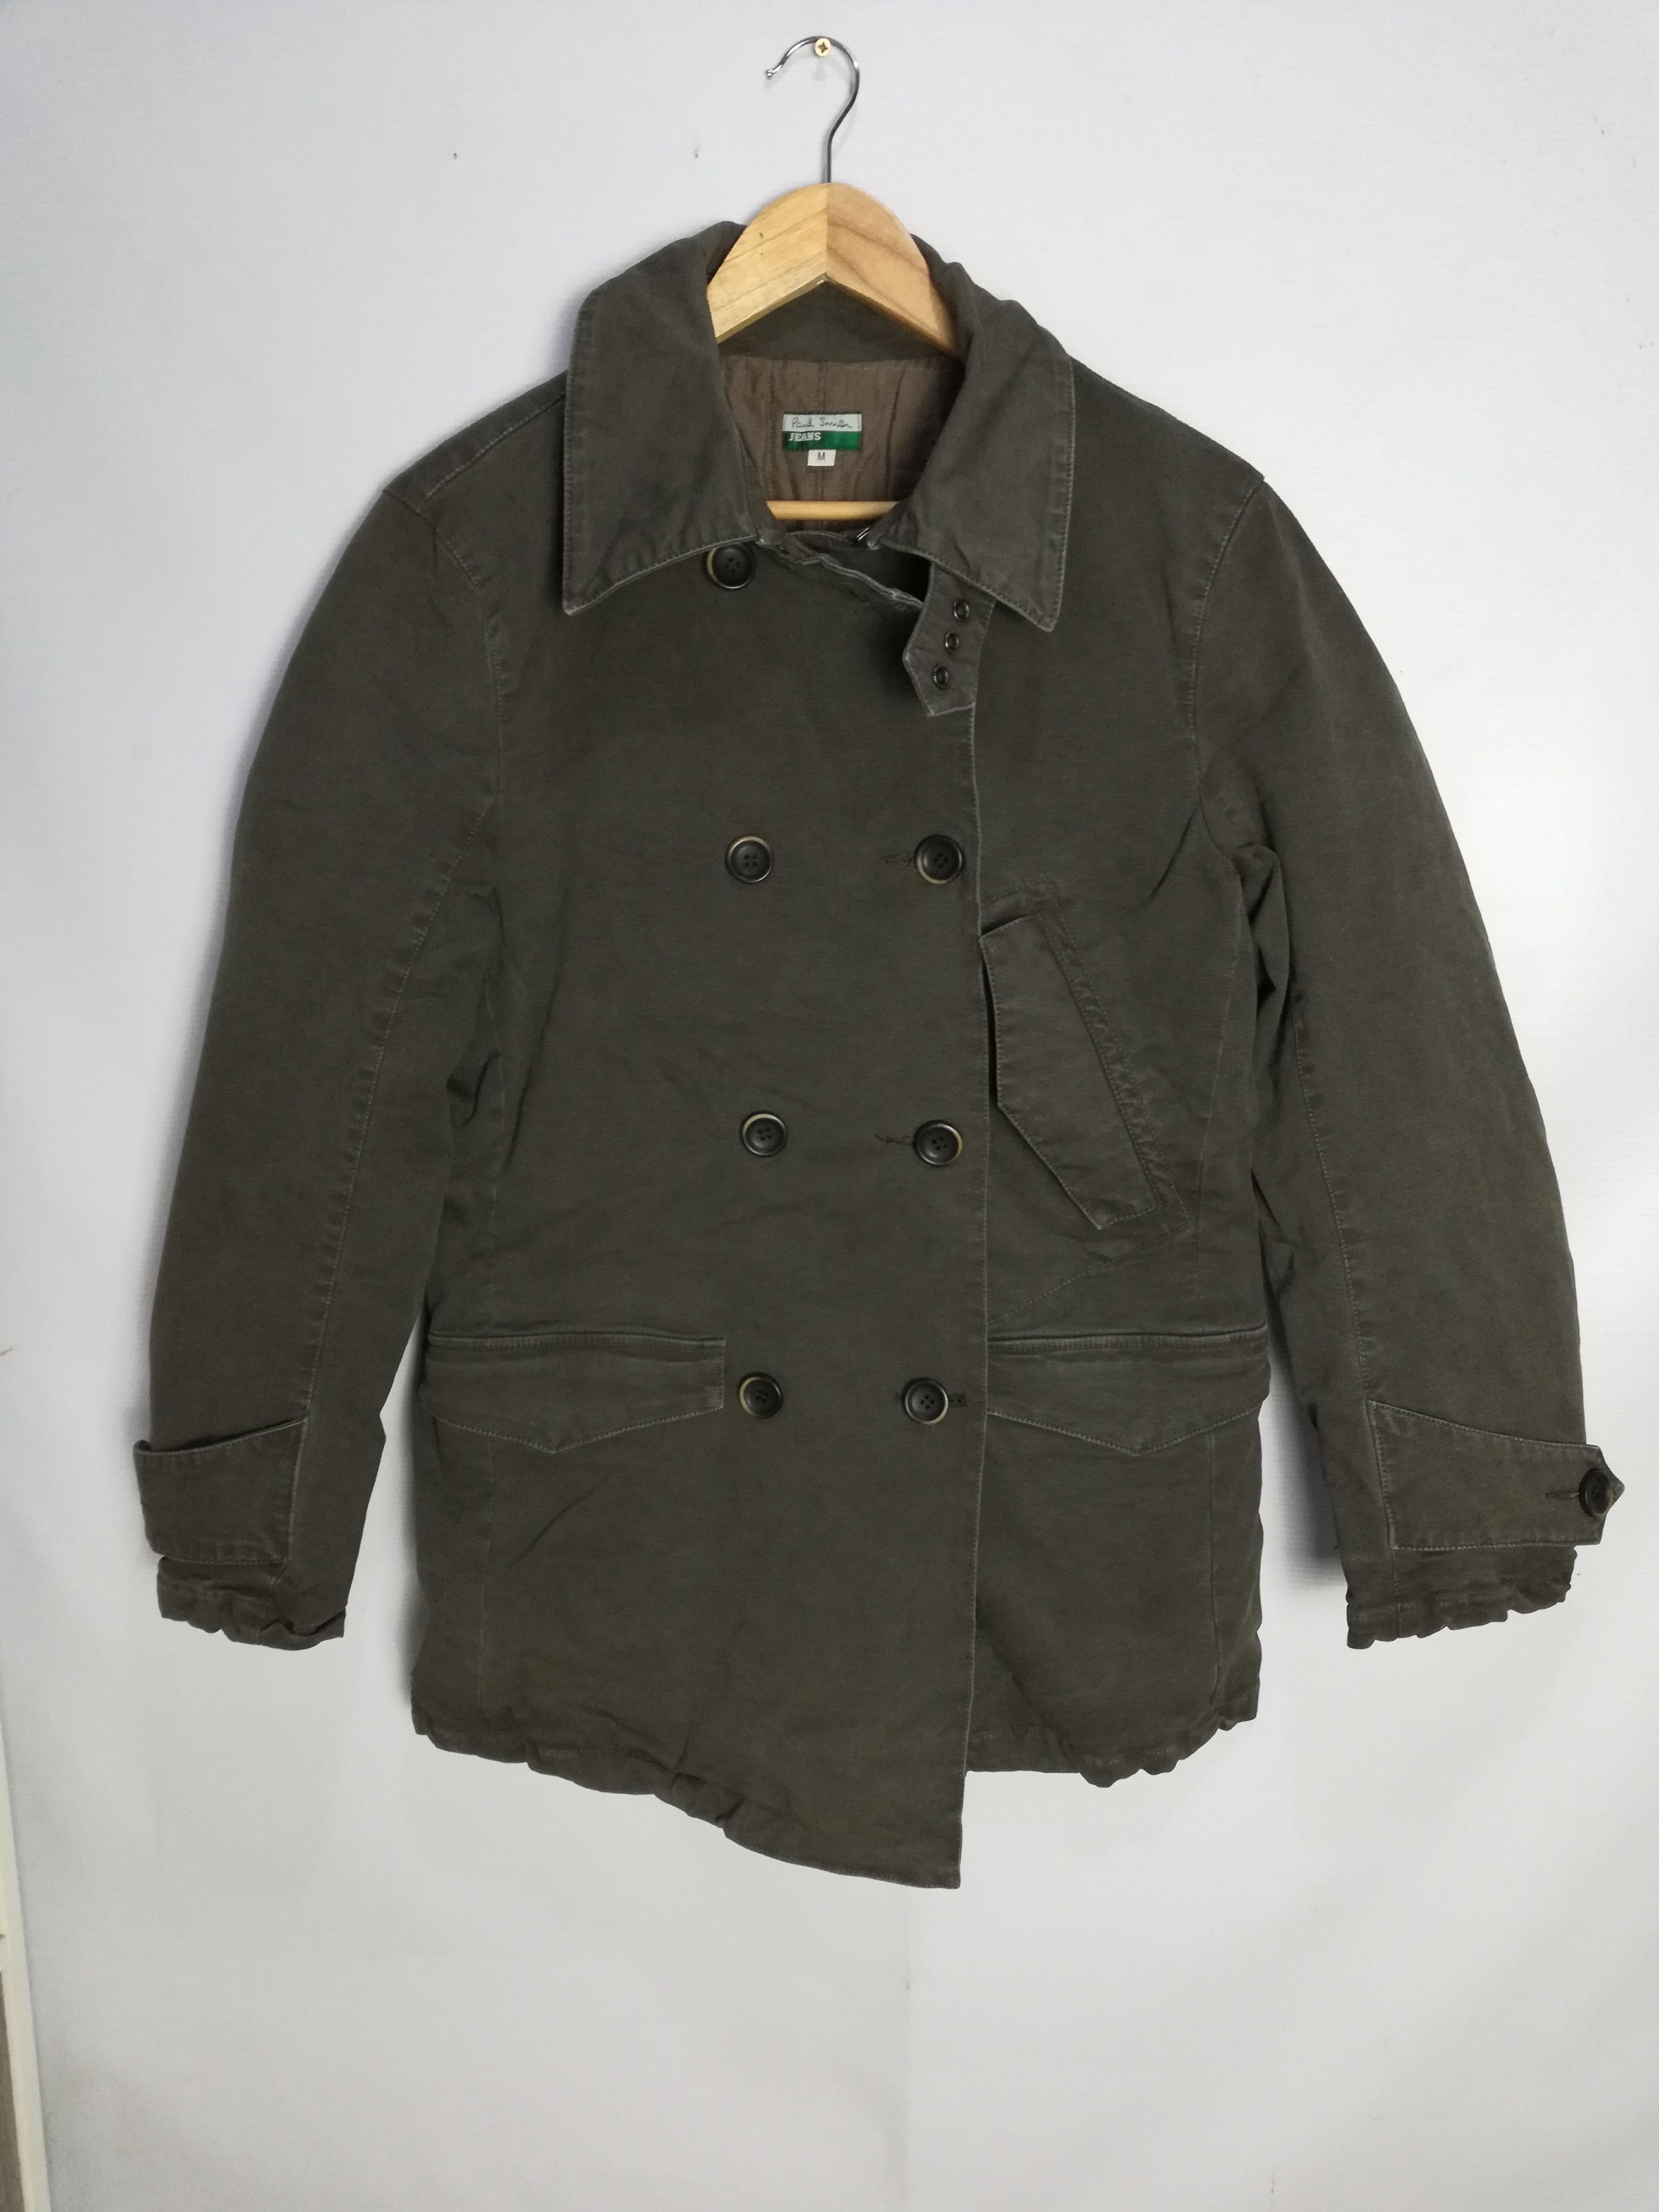 paul smith military cotton m65 jacket - 9